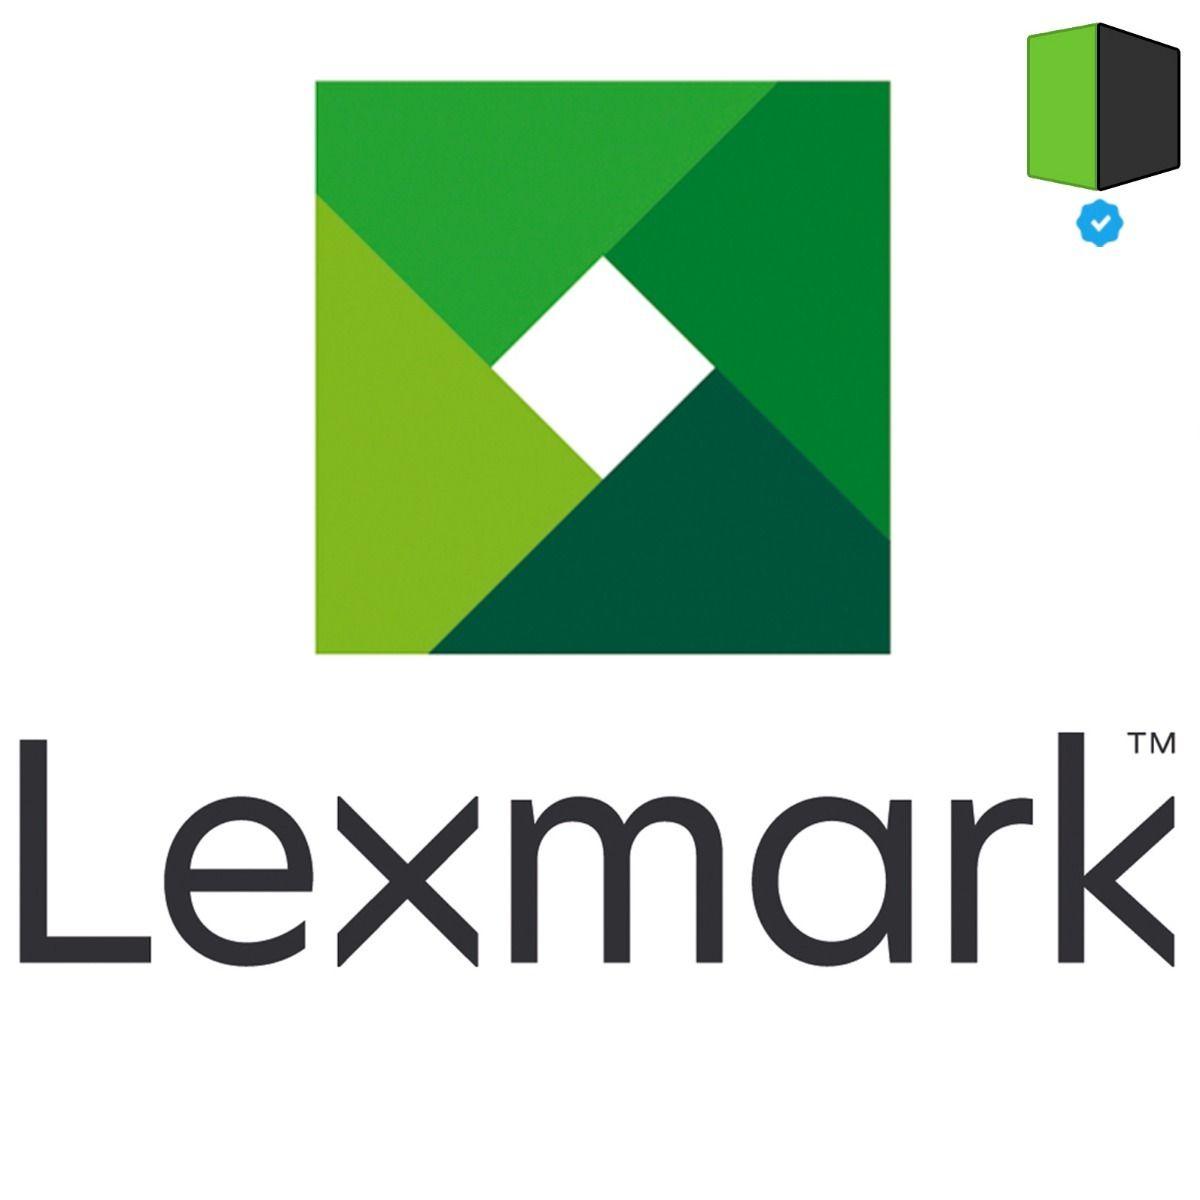 Old Lexmark Logo - Lexmark Old Logo